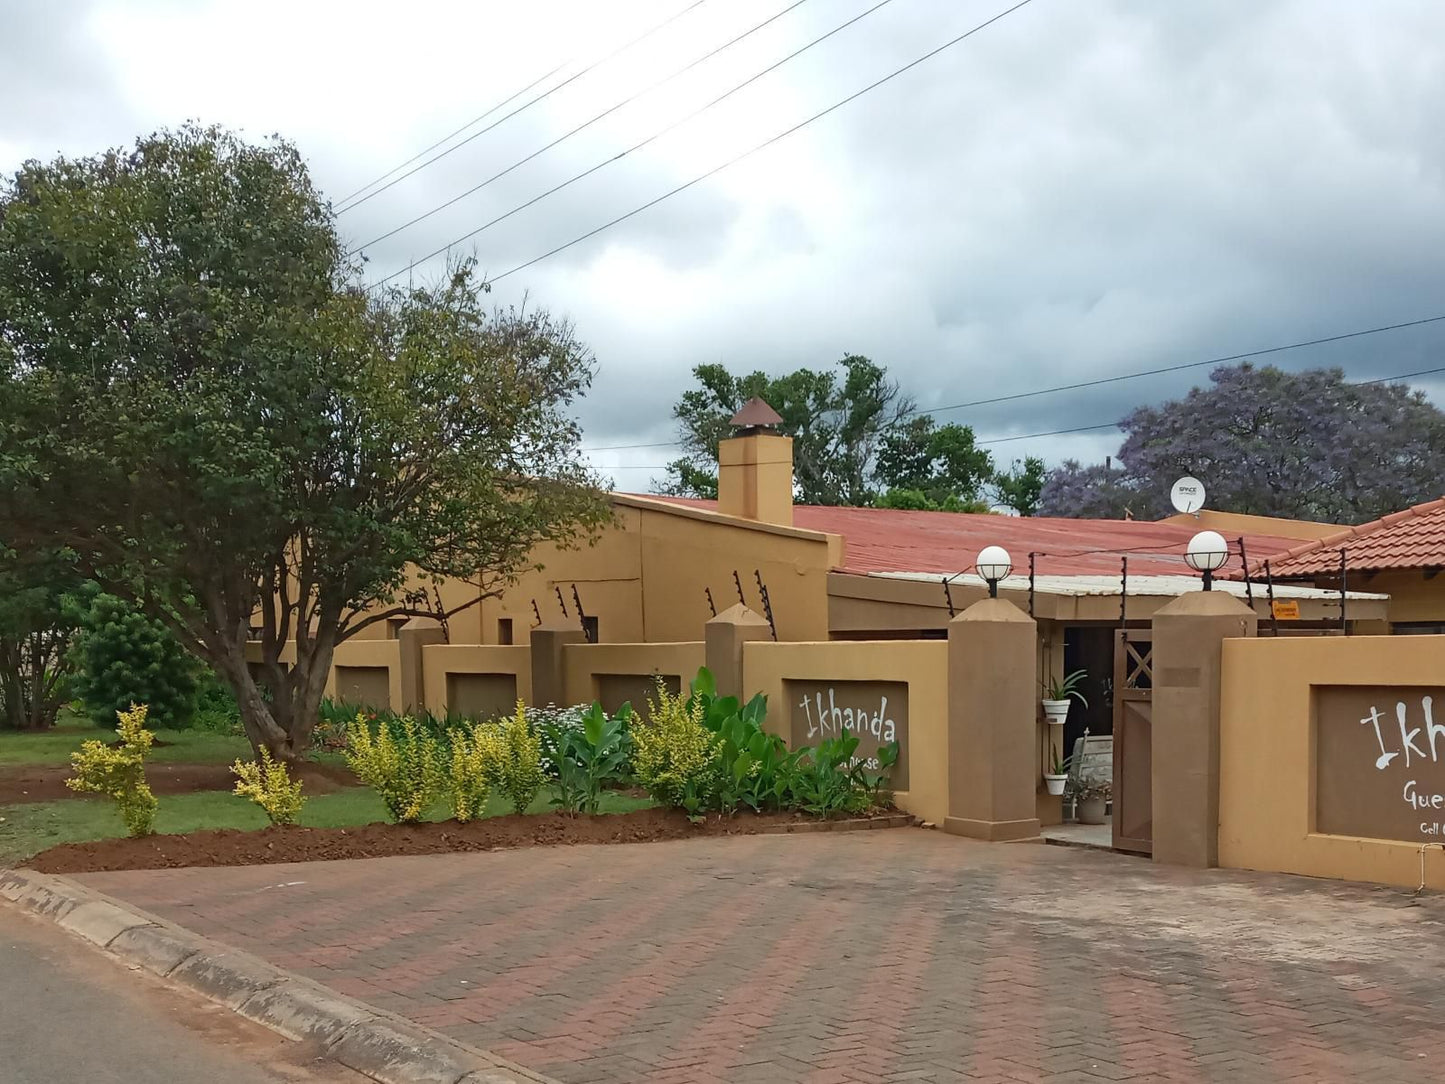 Ikhanda Guesthouse Lydenburg Mpumalanga South Africa House, Building, Architecture, Palm Tree, Plant, Nature, Wood